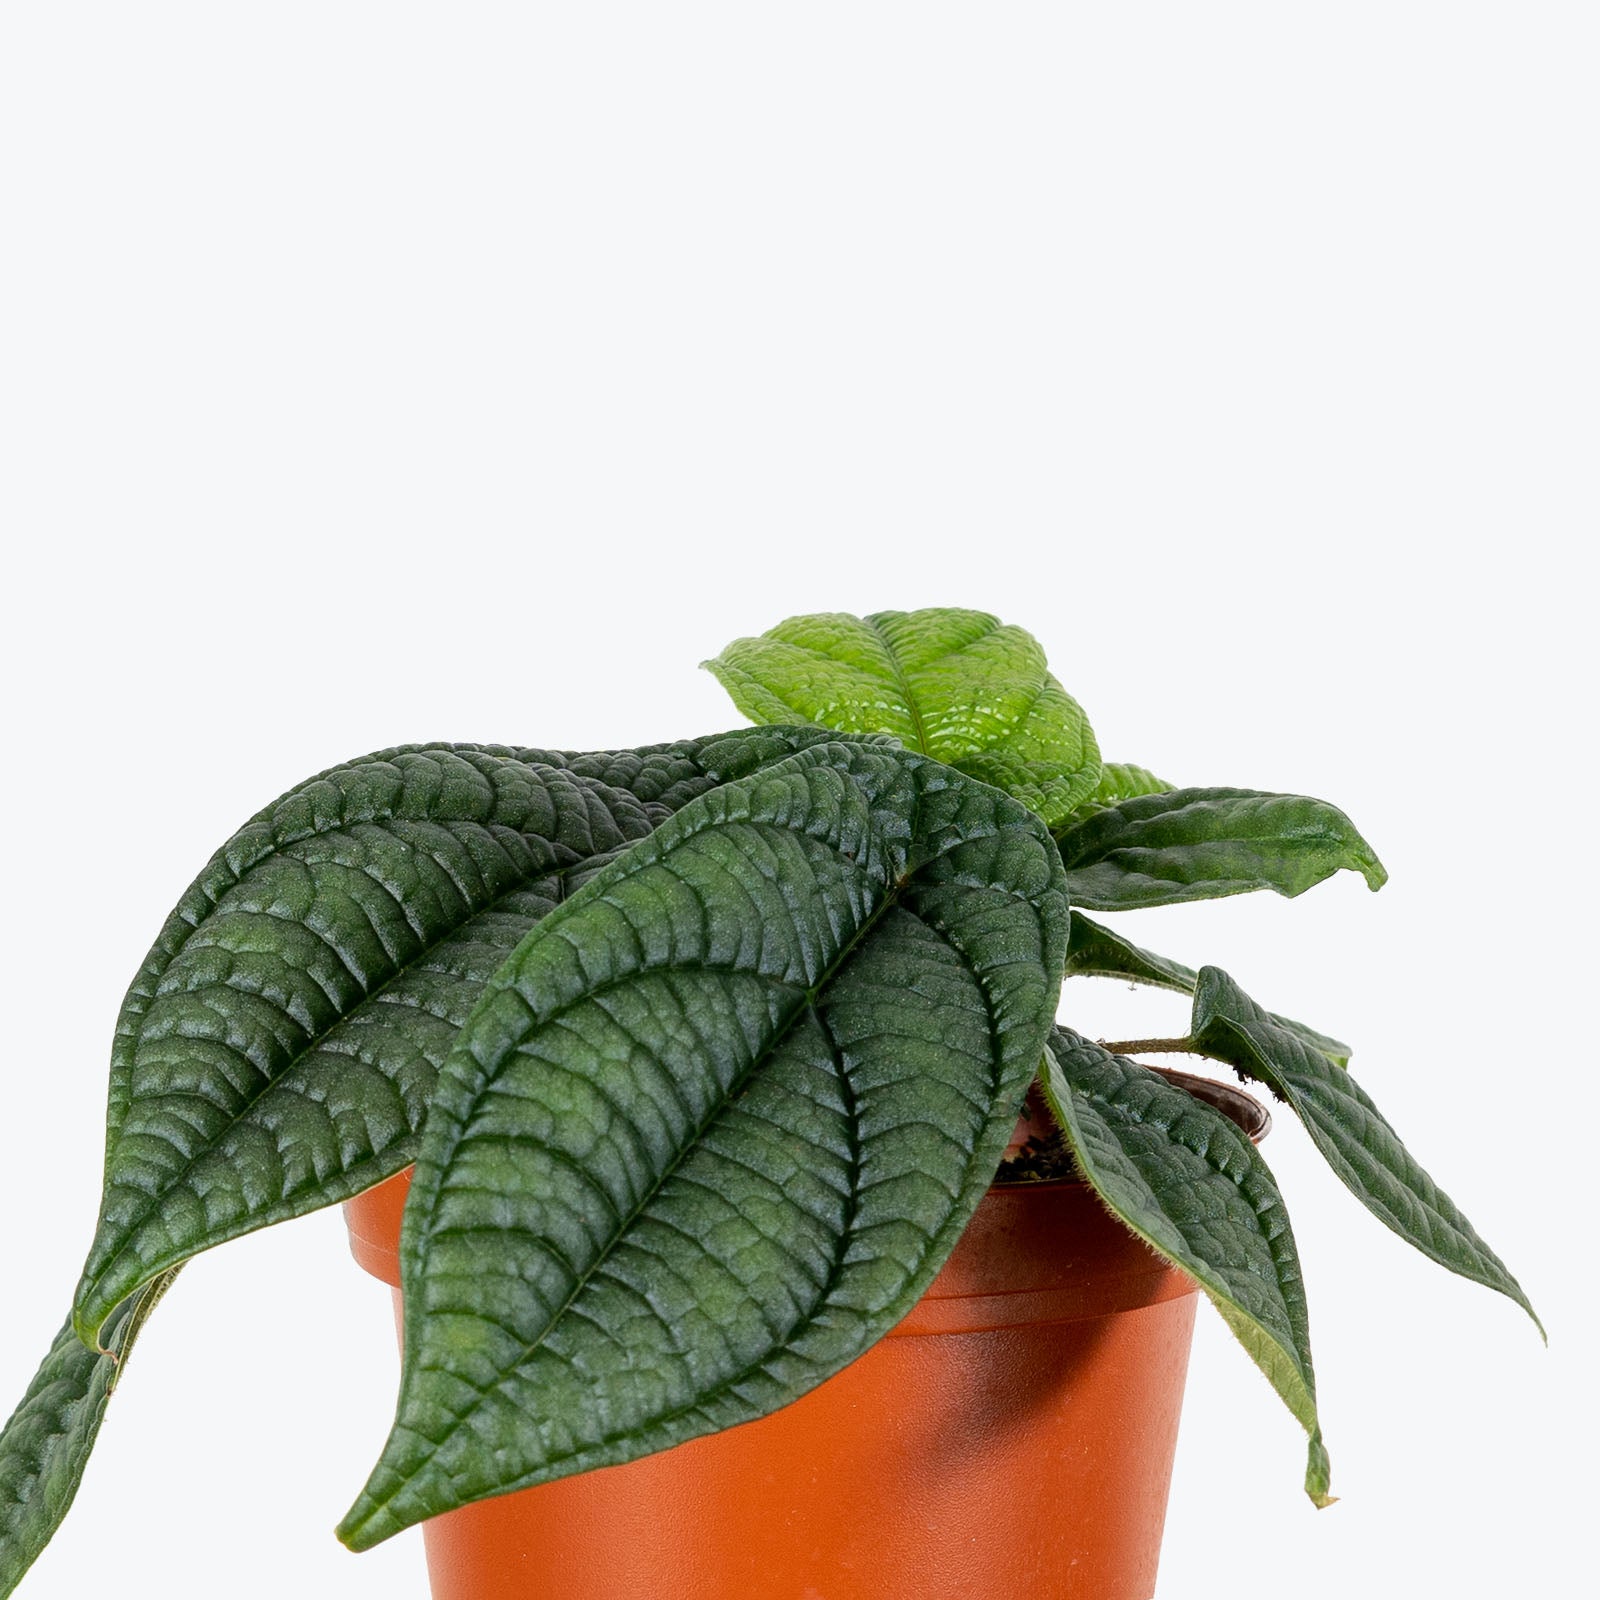 Piper Parmatum - House Plants Delivery Toronto - JOMO Studio